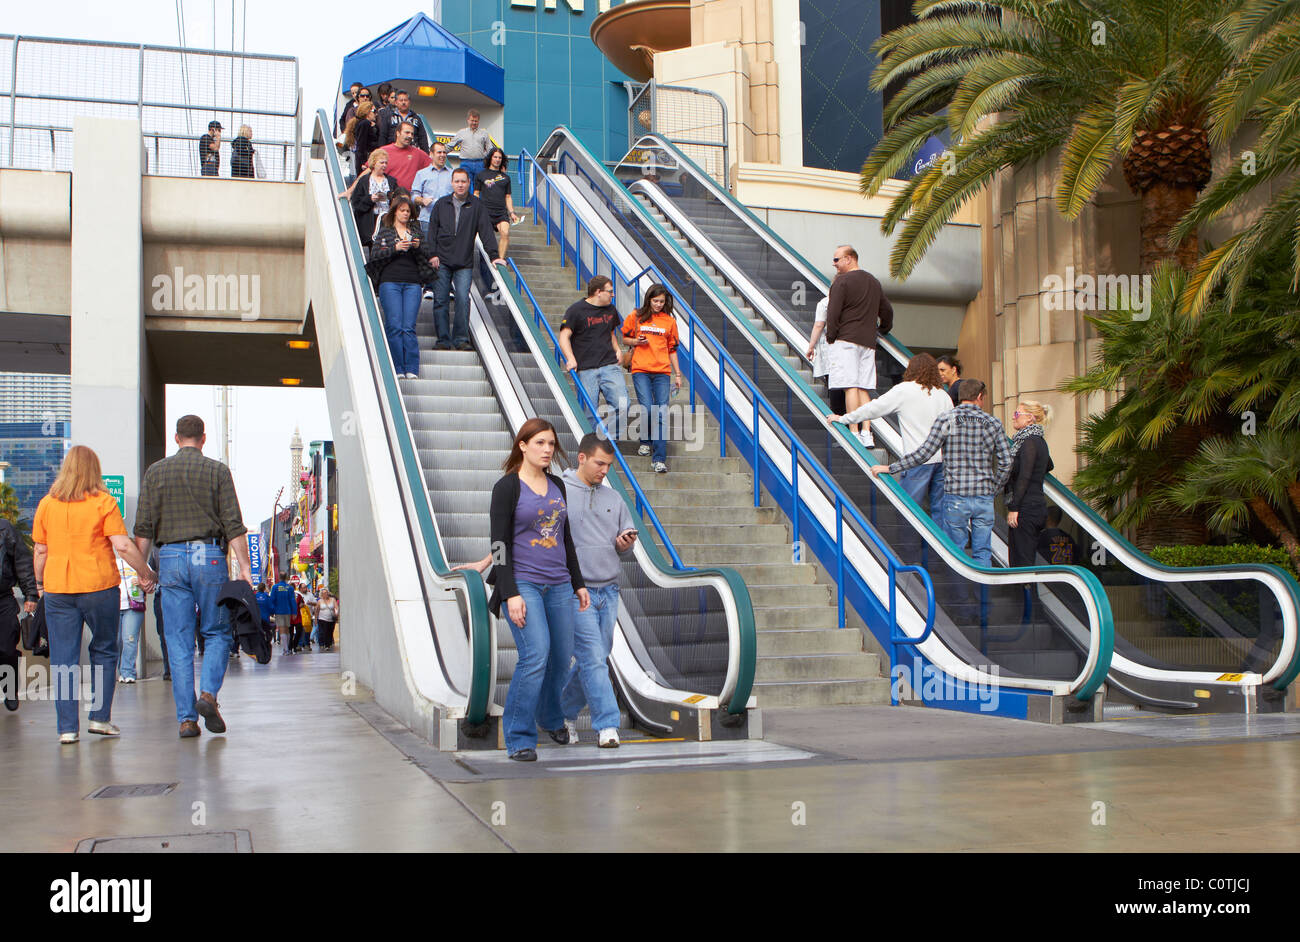 People walk on the street - escalator - Las Vegas Stock Photo